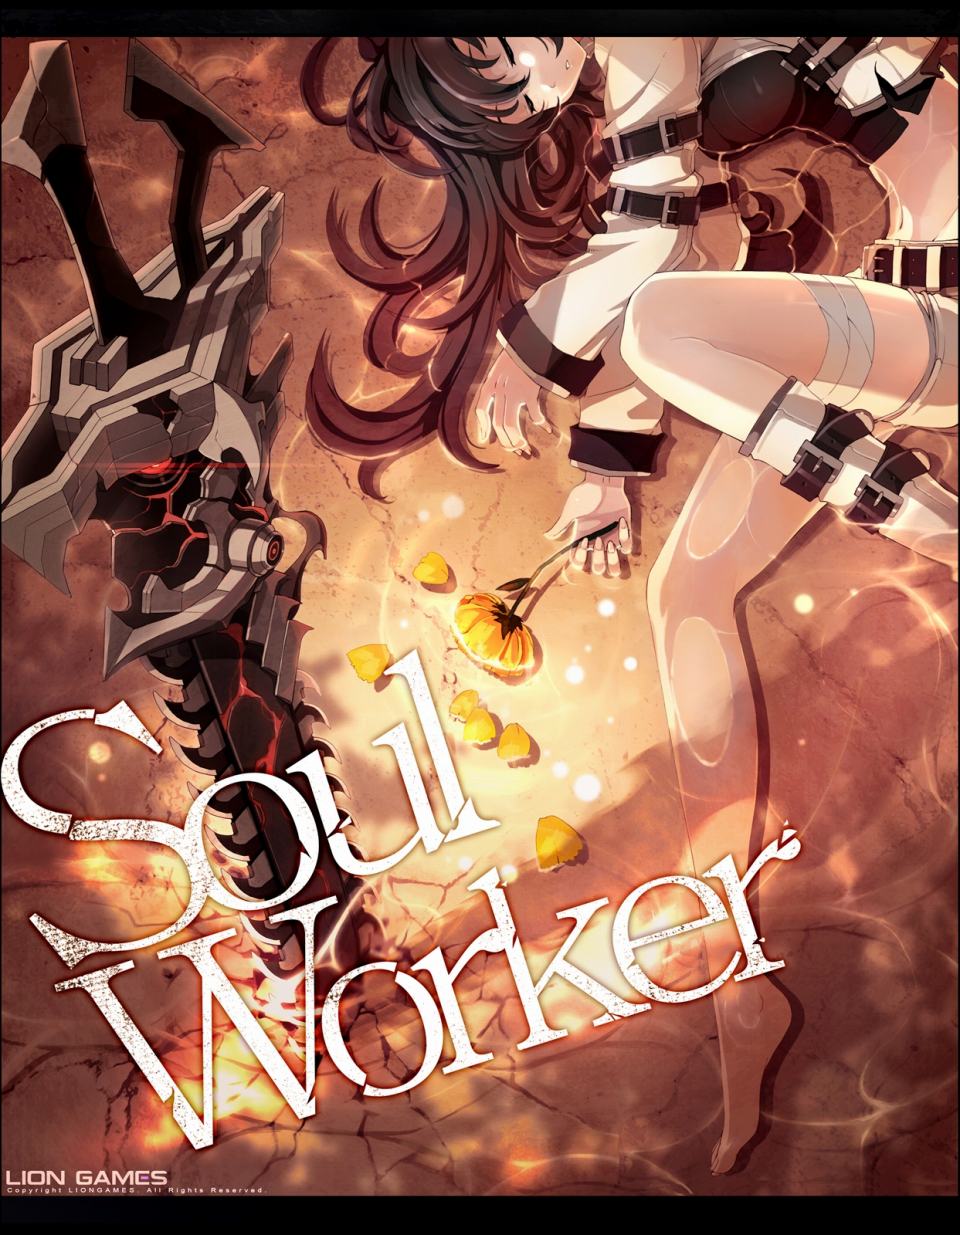 NHN Japan、韓国LION GAMESと「Soul Worker」日本国内独占提供契約を締結の画像